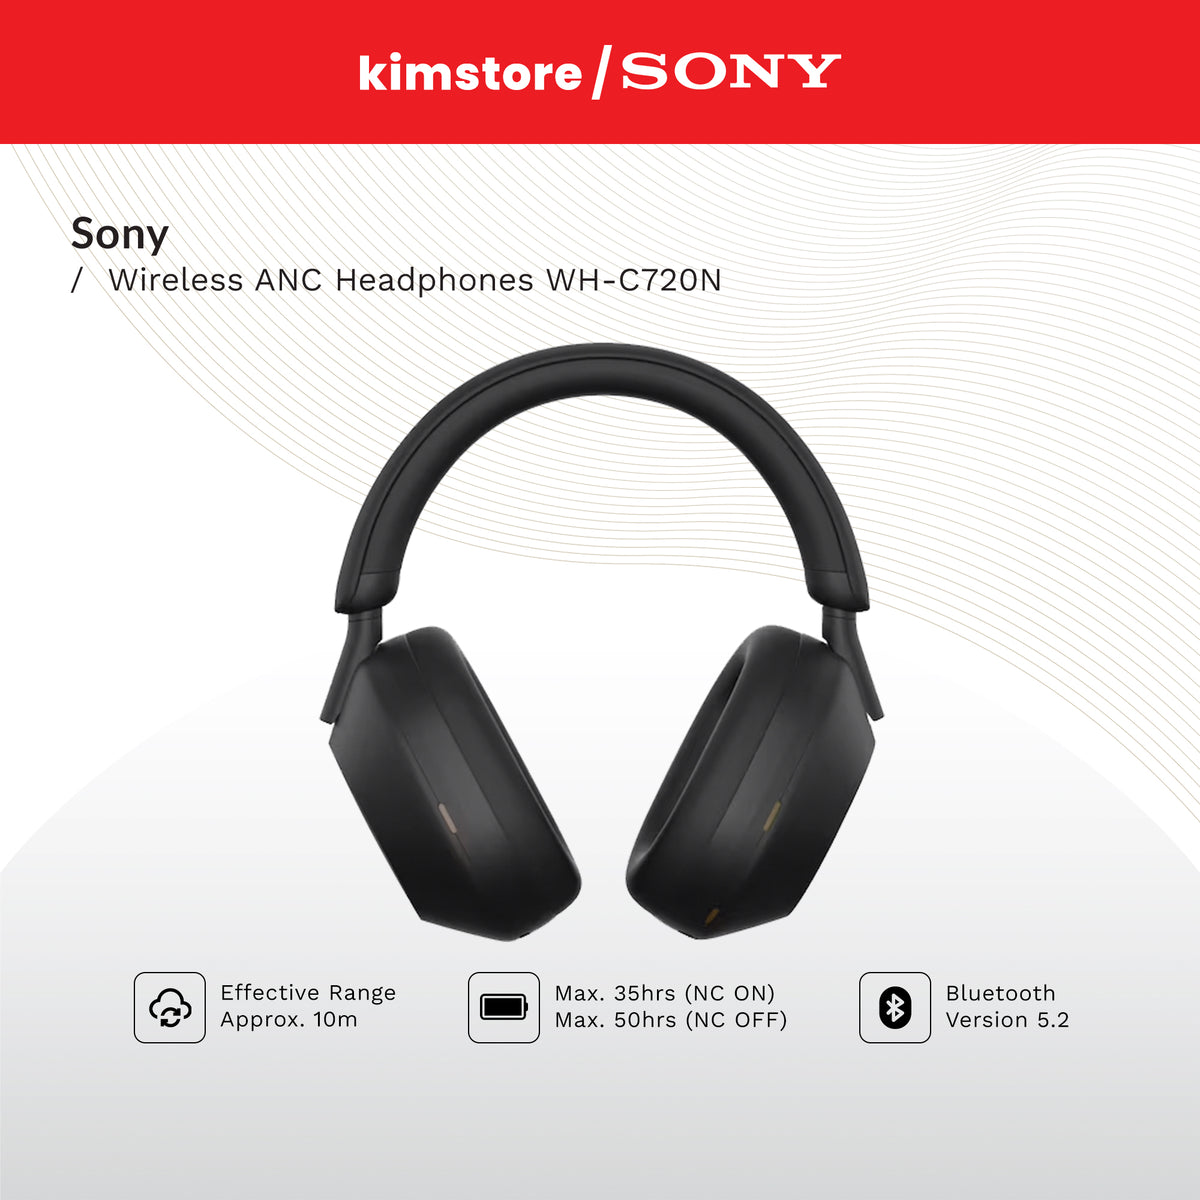 SONY Wireless ANC Headphones WH-C720N